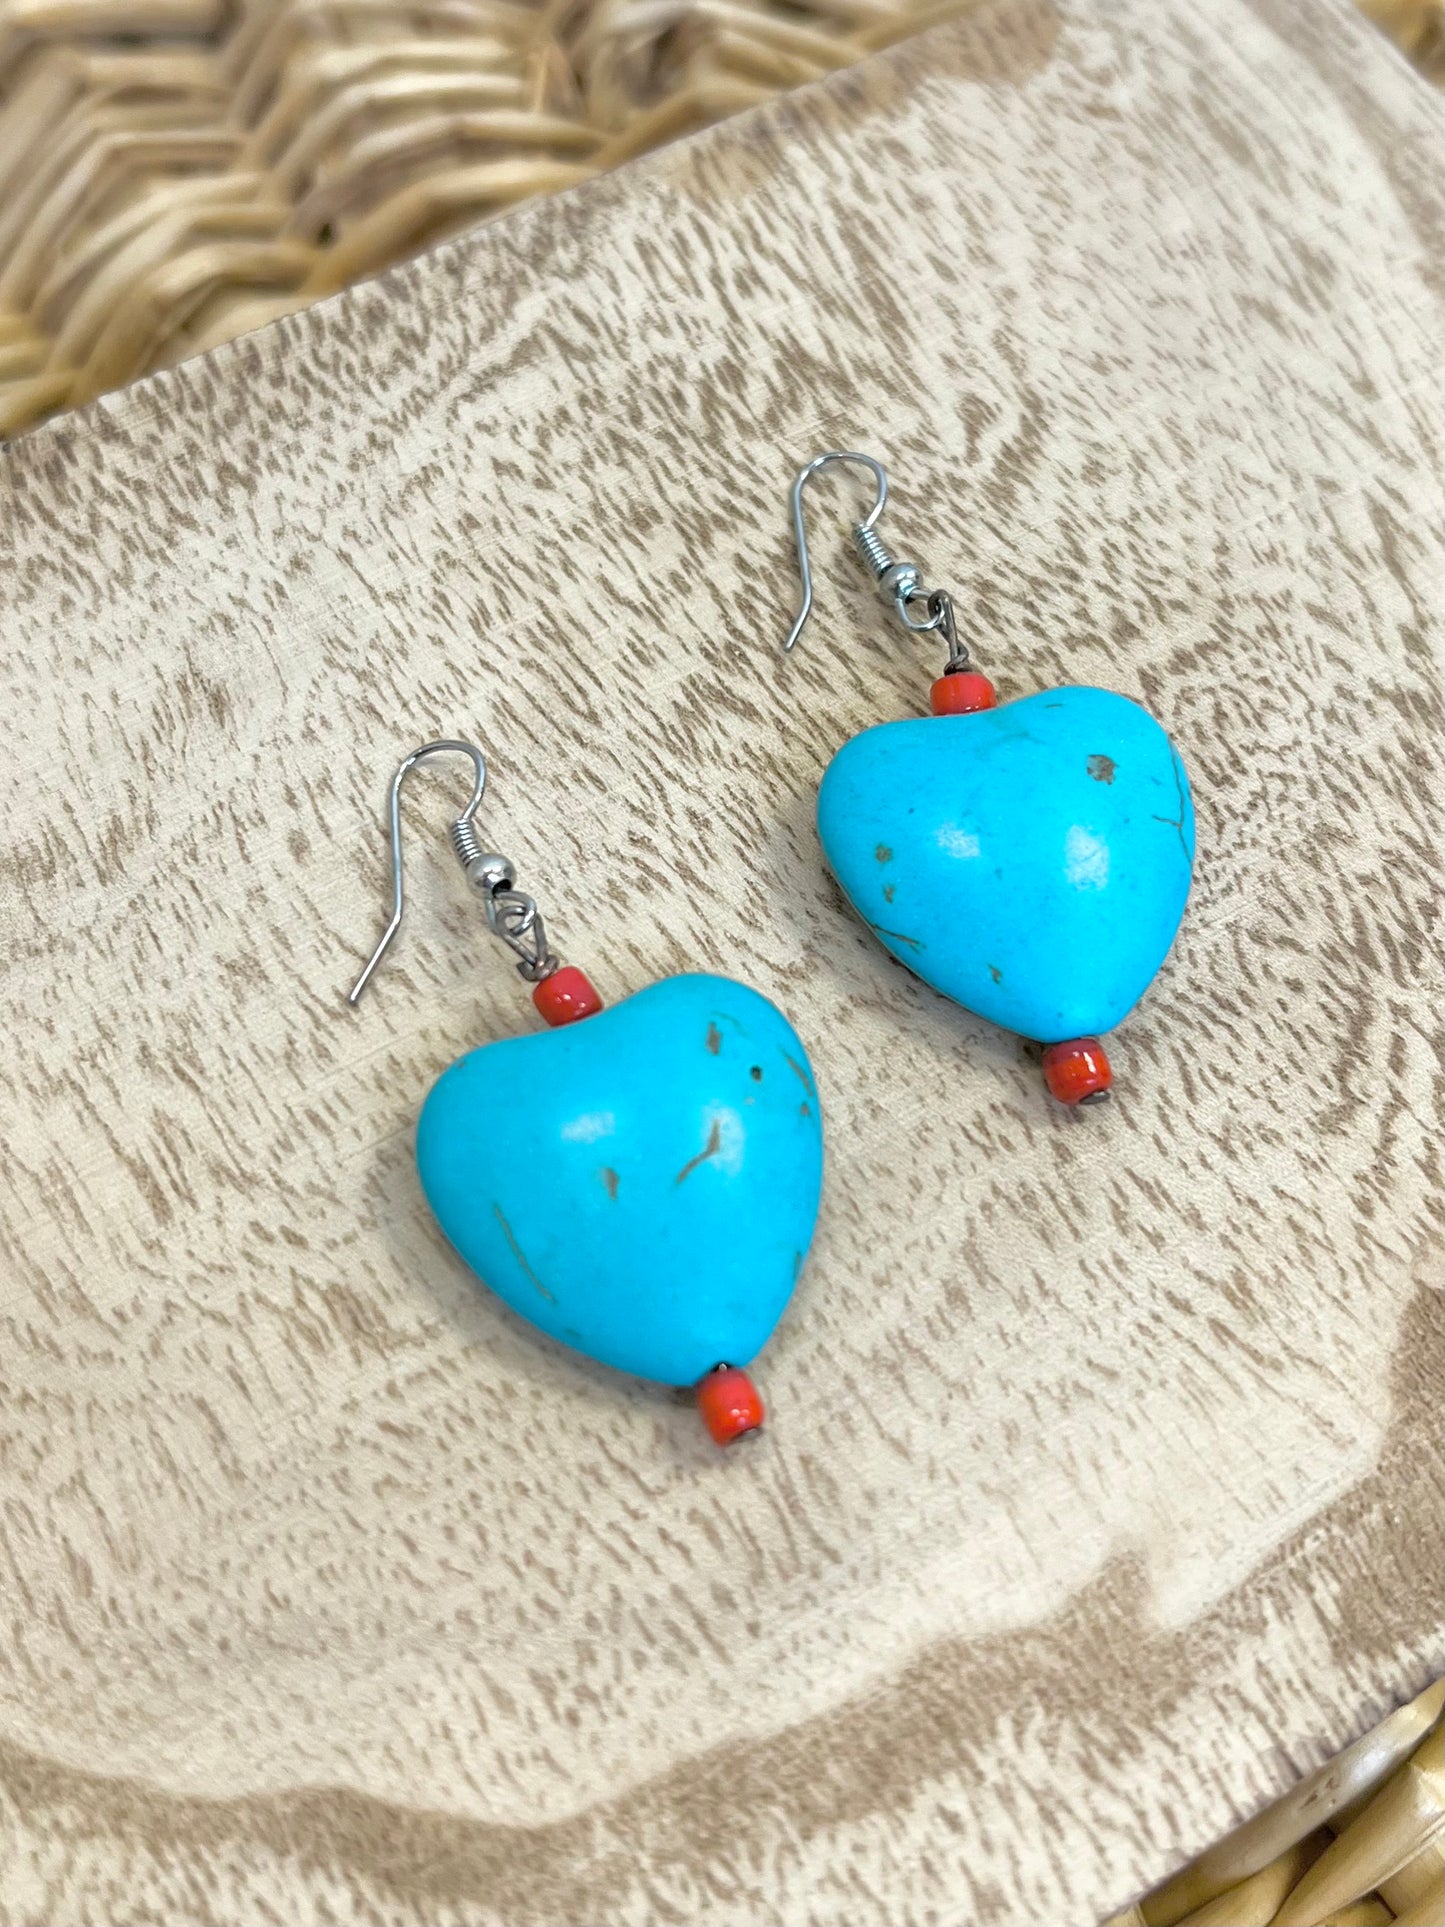 Turquoise Stone Heart Earrings